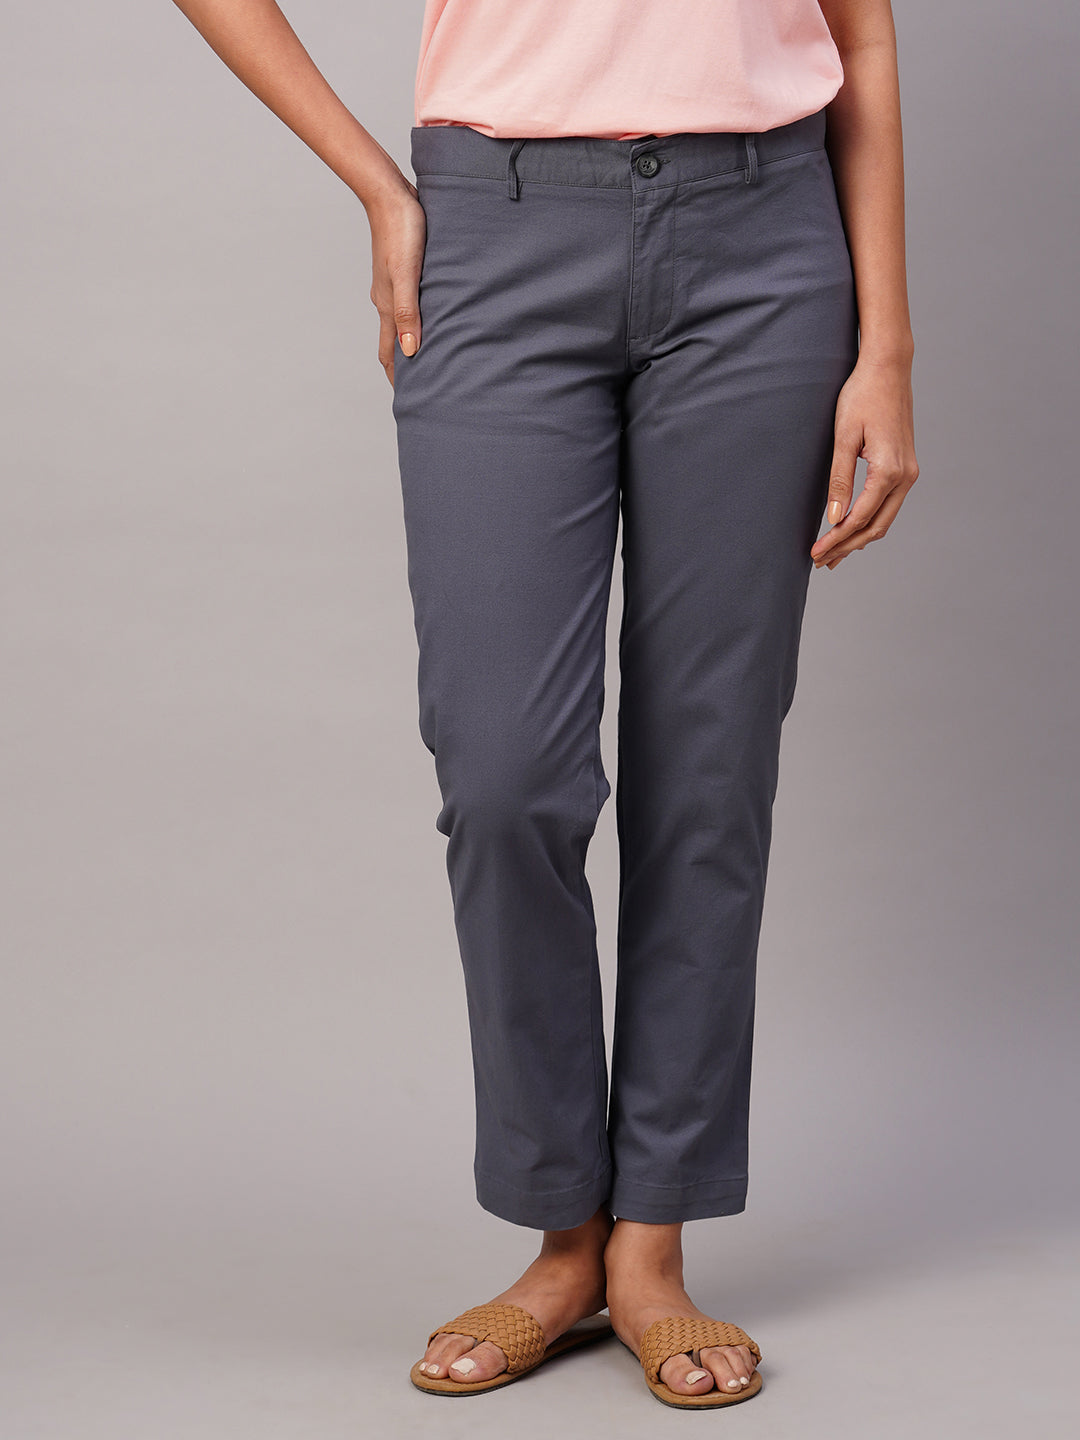 Women's Cotton Lycra Blue Regular Fit Pant